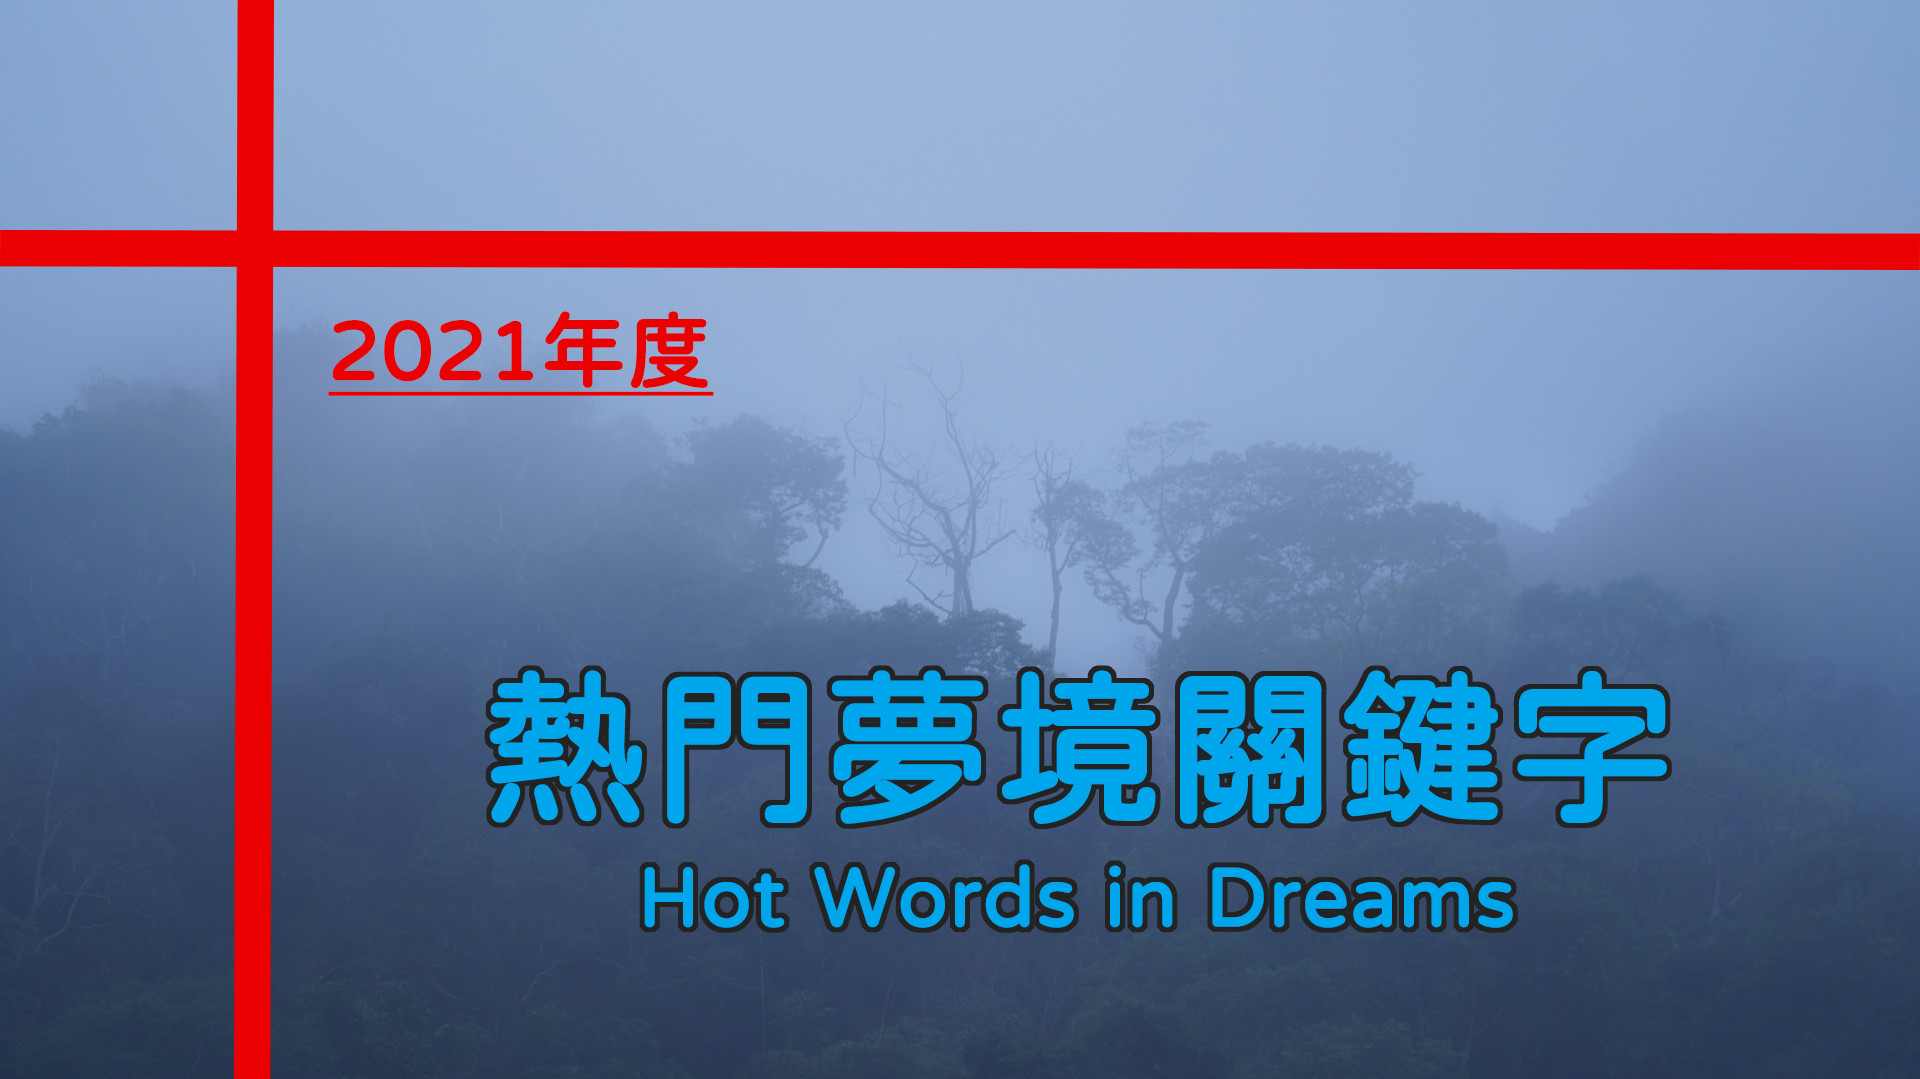 Hot Words in Dreams in 2021